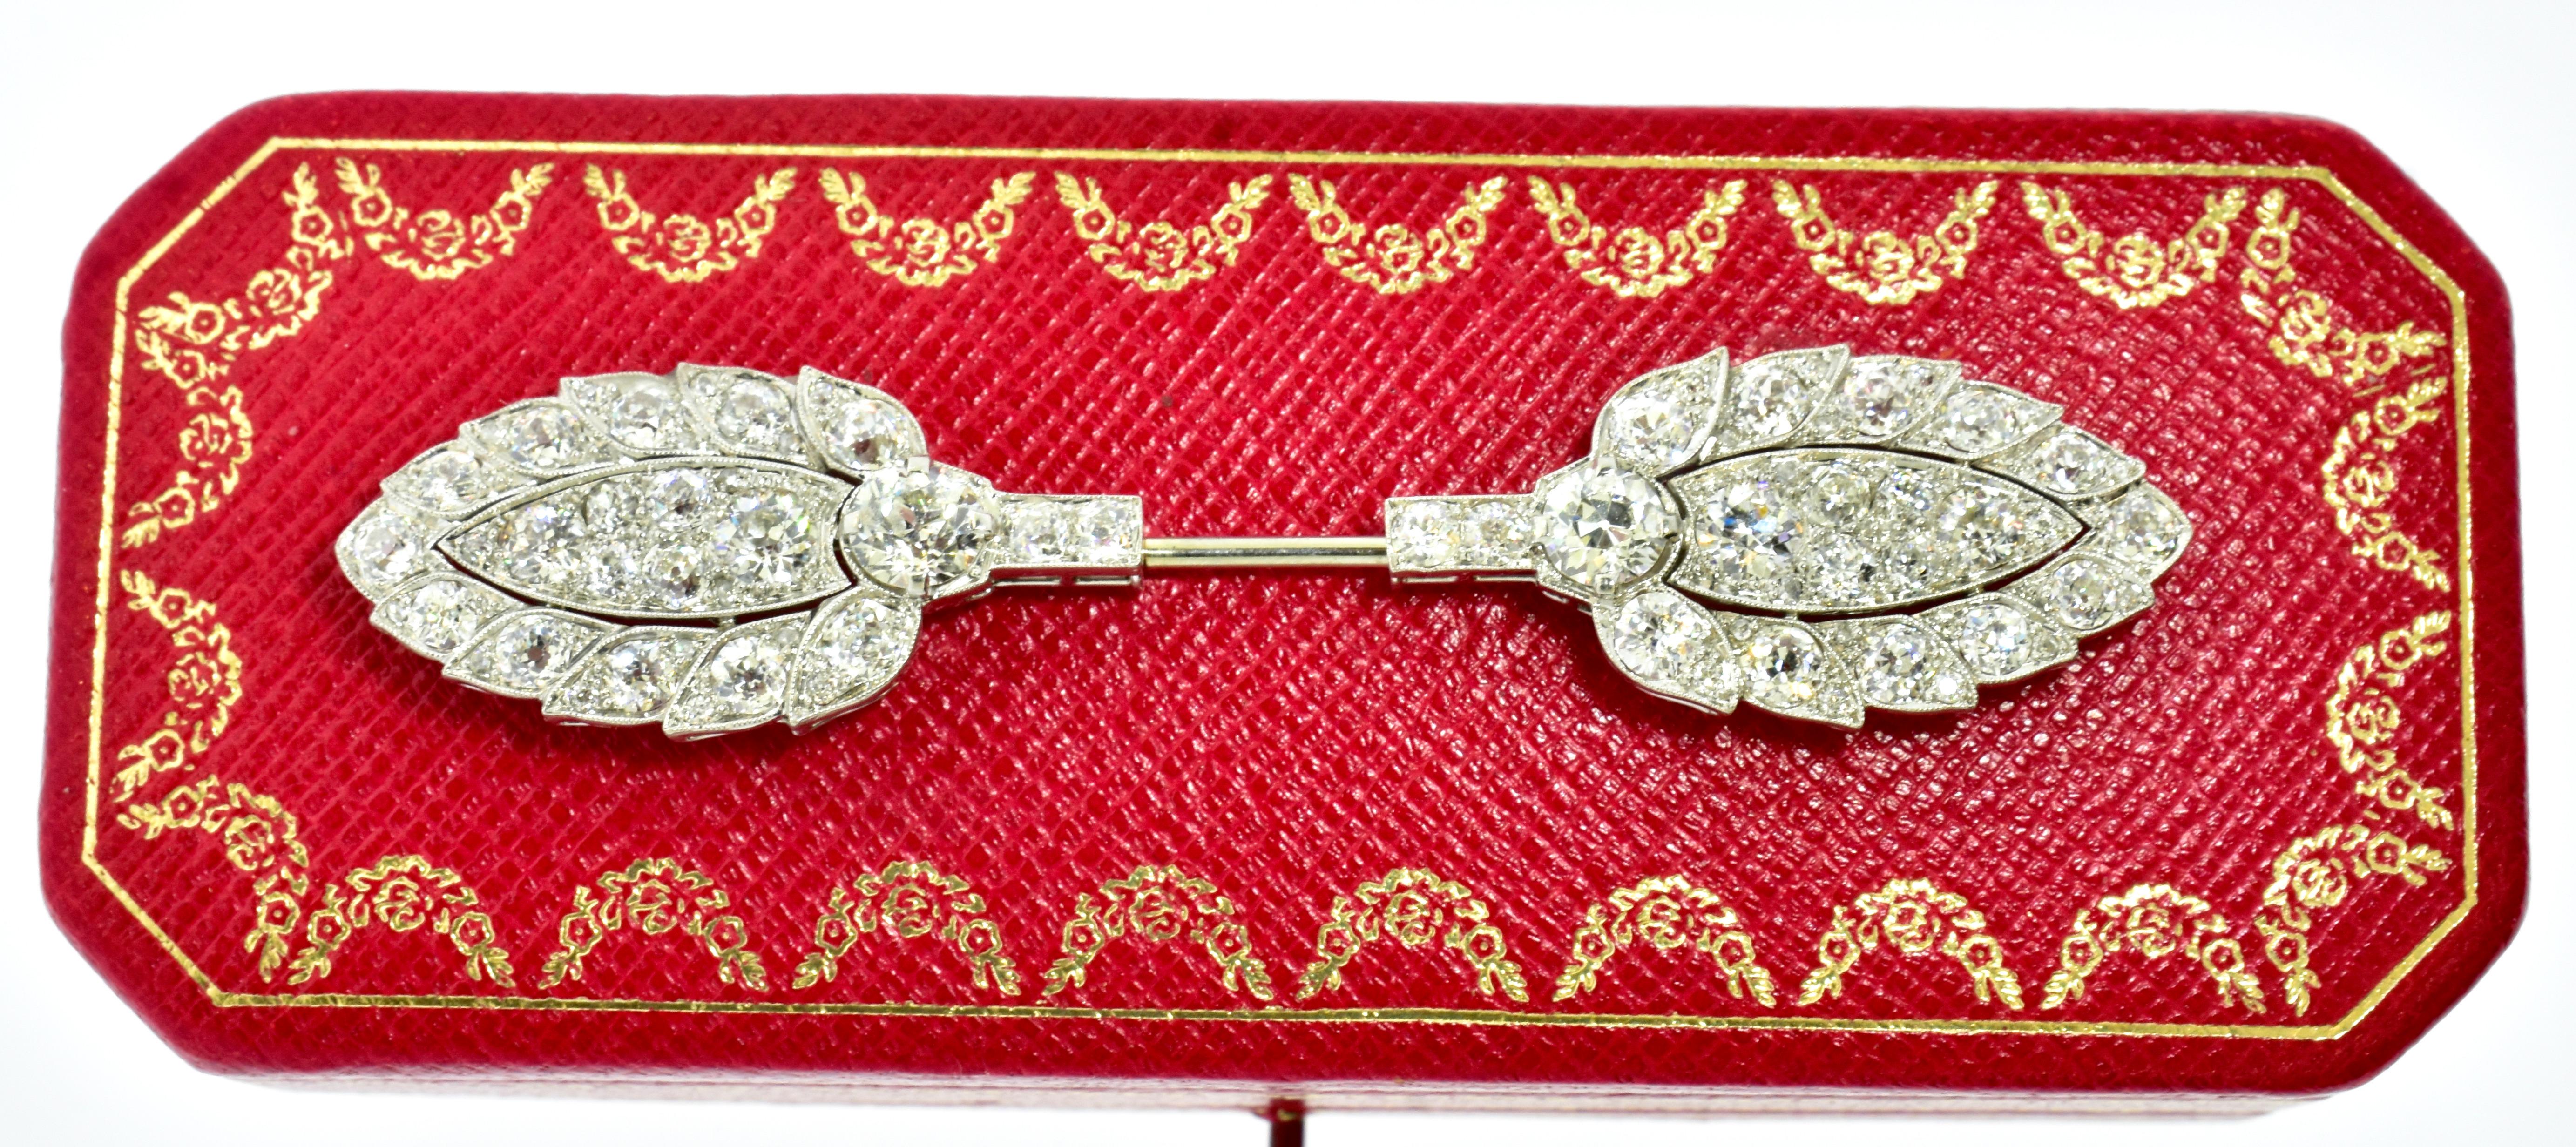 Cartier Edwardian Diamond and Platinum Antique Jabot or Cliquet Pin, c. 1914 1